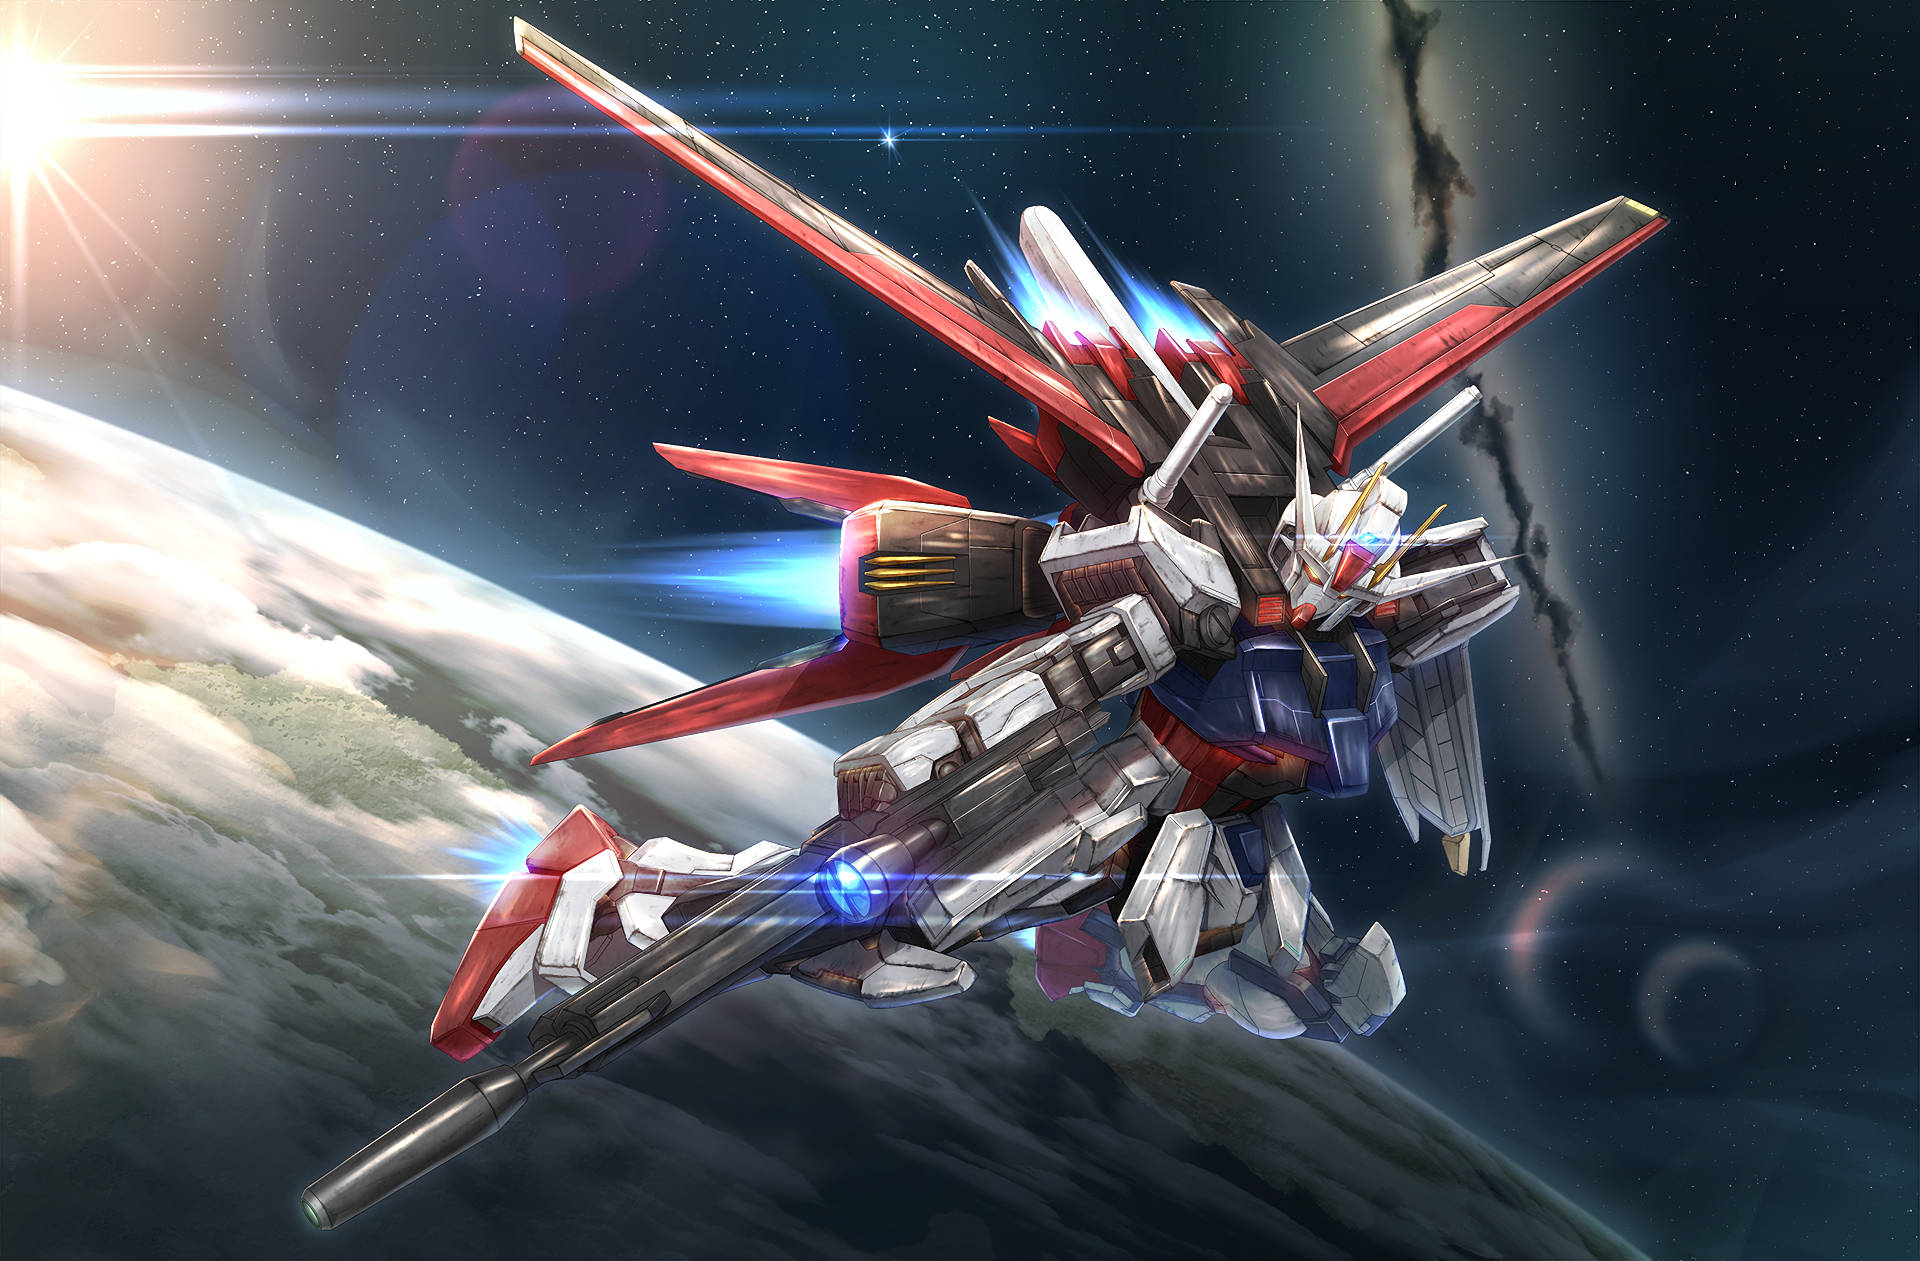 Gundam: Revolusi Teknologi dalam Dunia Robot